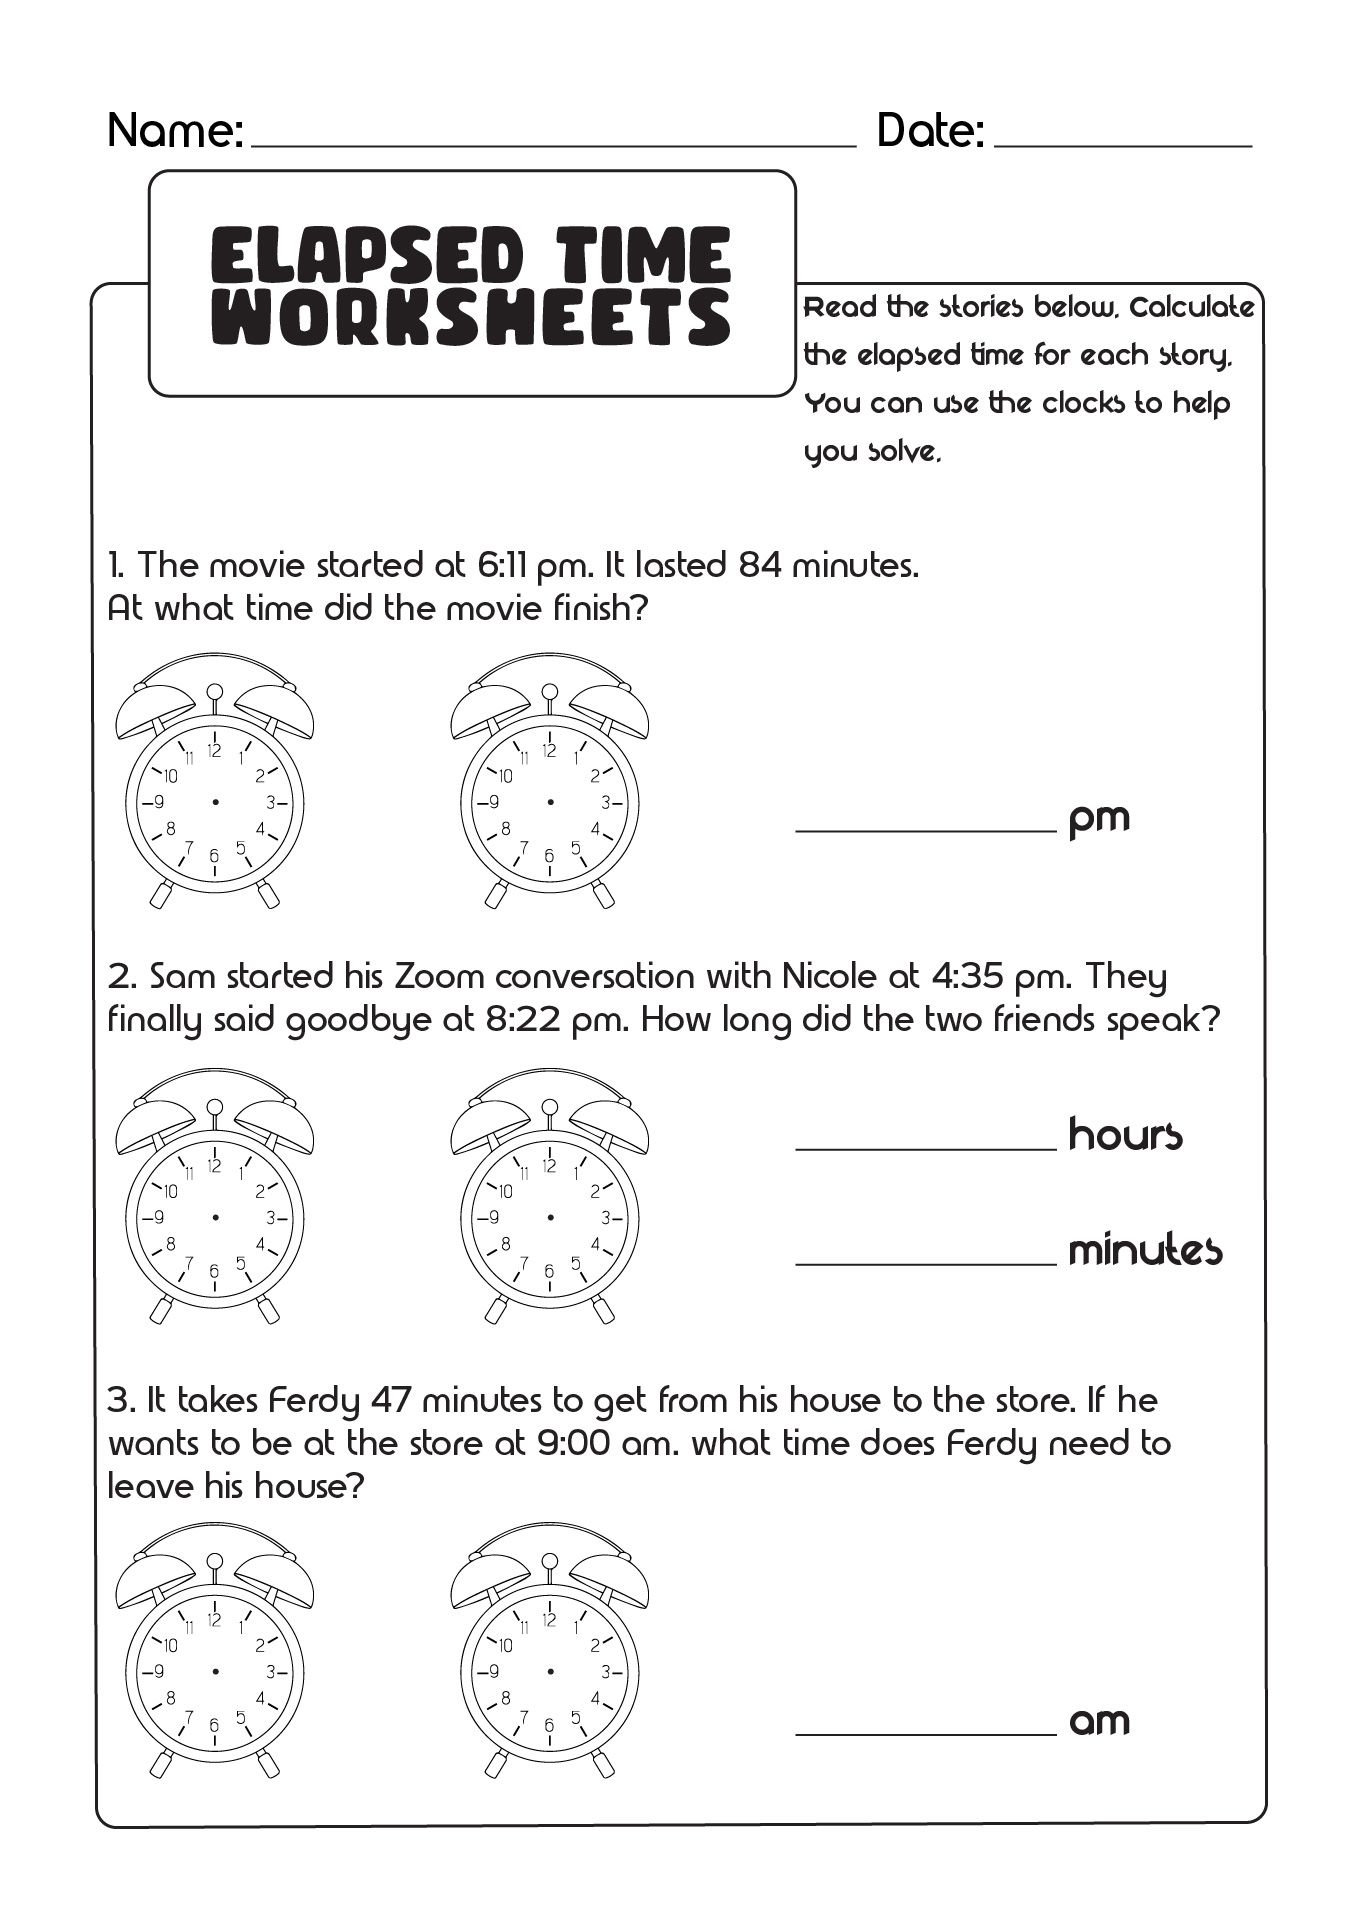 Elapsed Time Worksheets Image